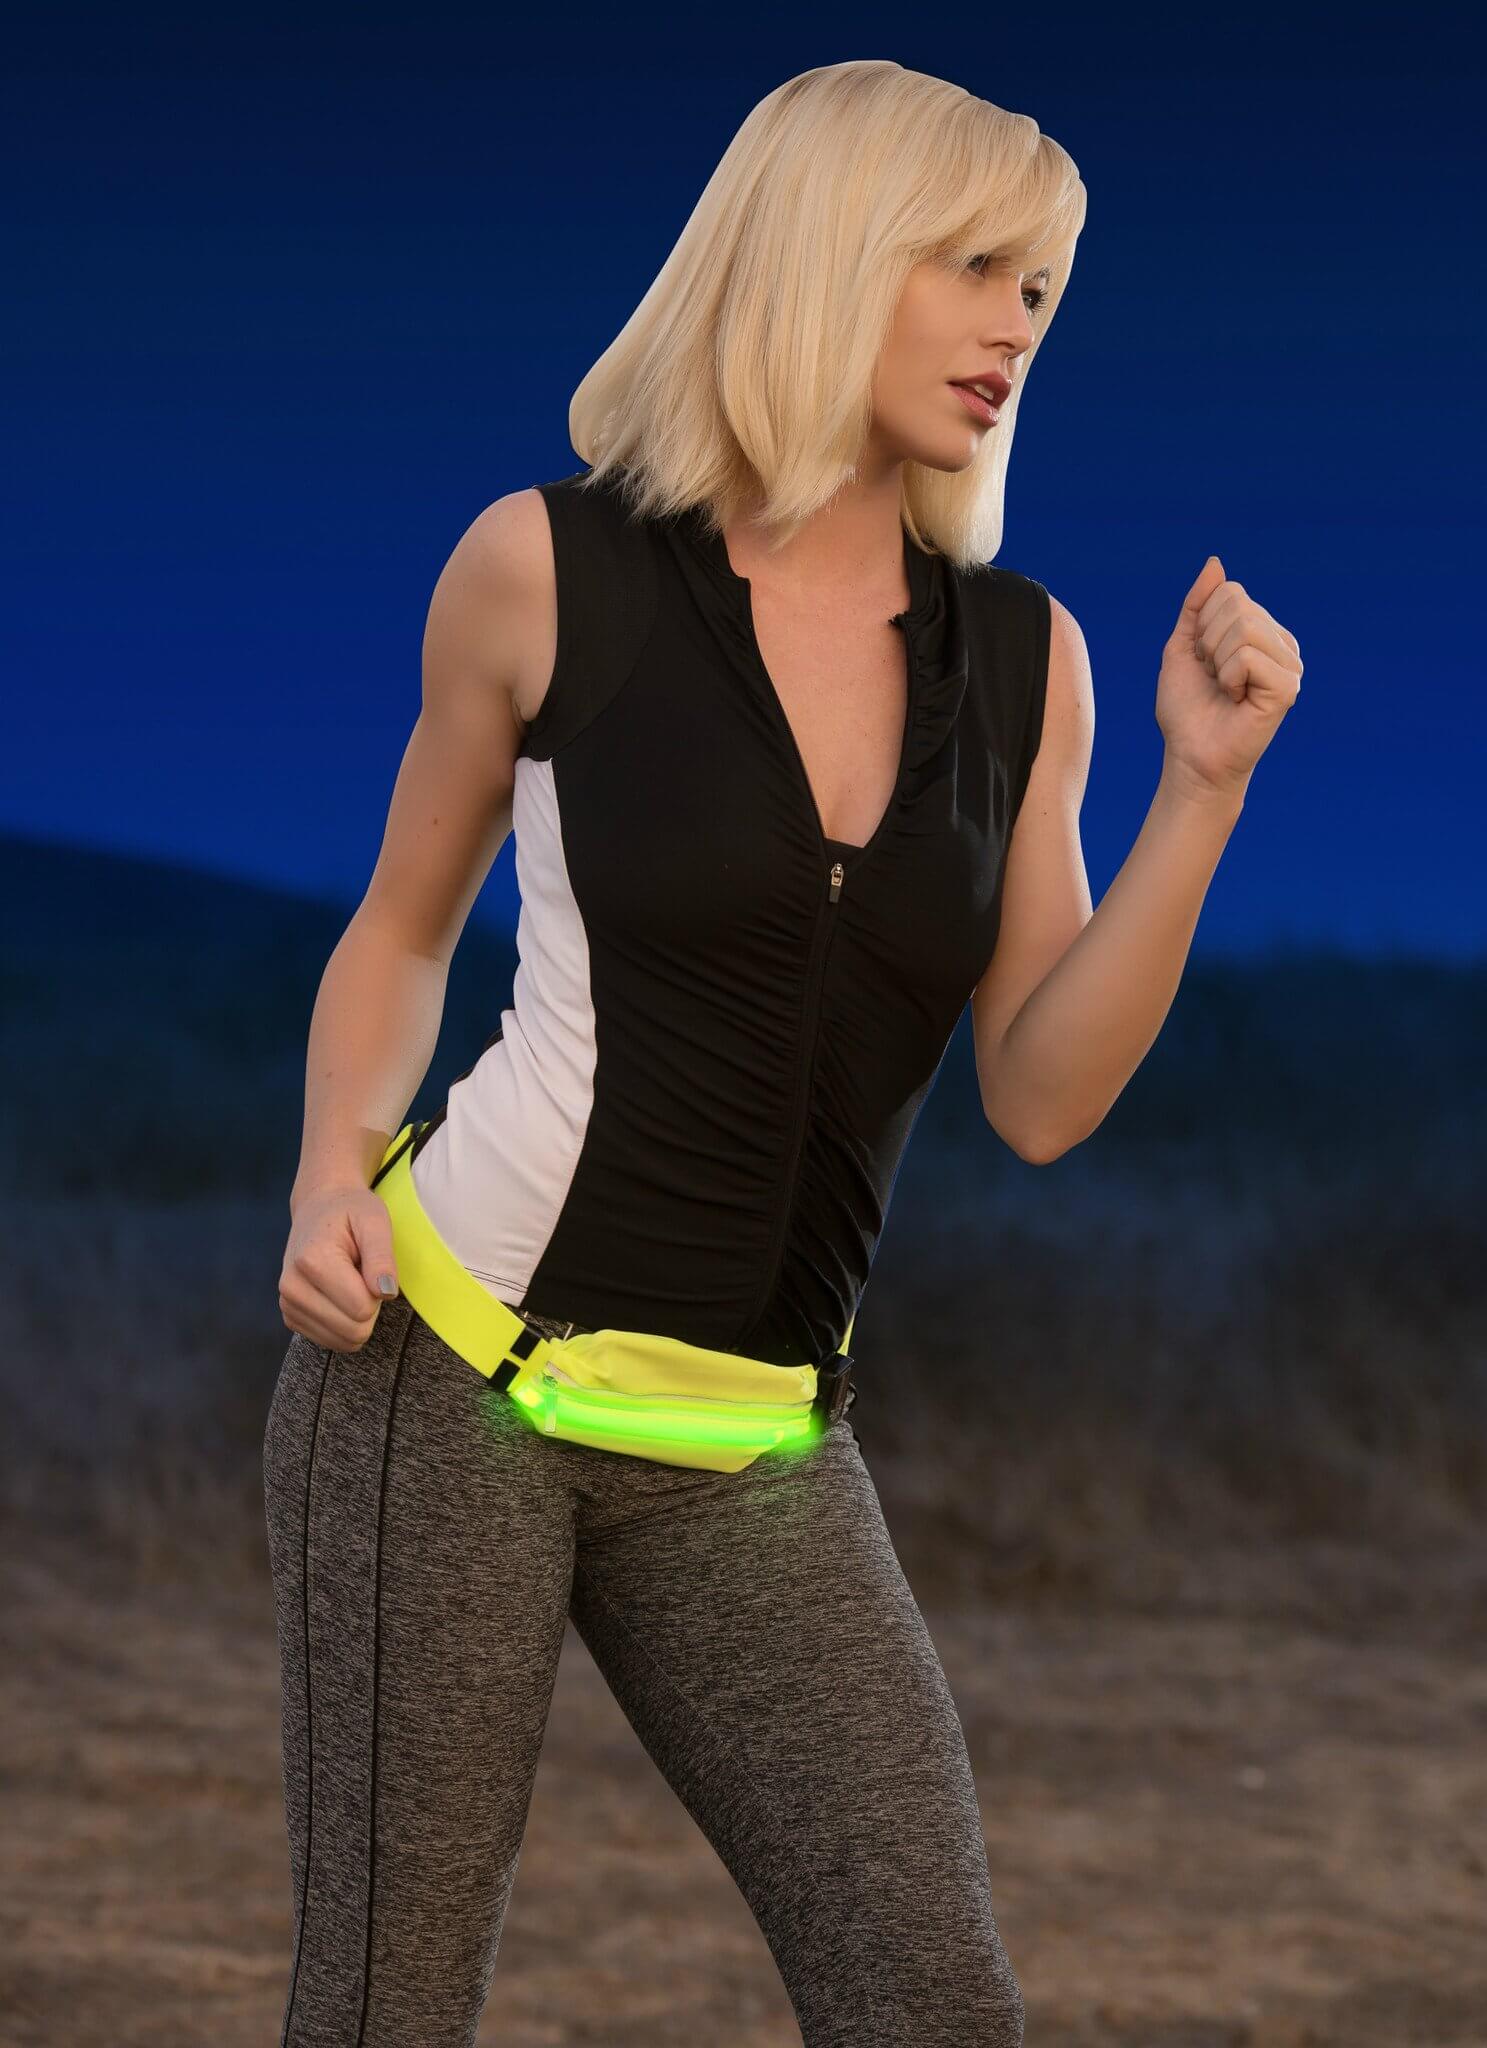 BSEEN LED Running Waist Belt - USB Rechargeable Reflective Glowing LED  Waistband, Flashing Safety Light Belt for Runners, Joggers, Walkers, Pet